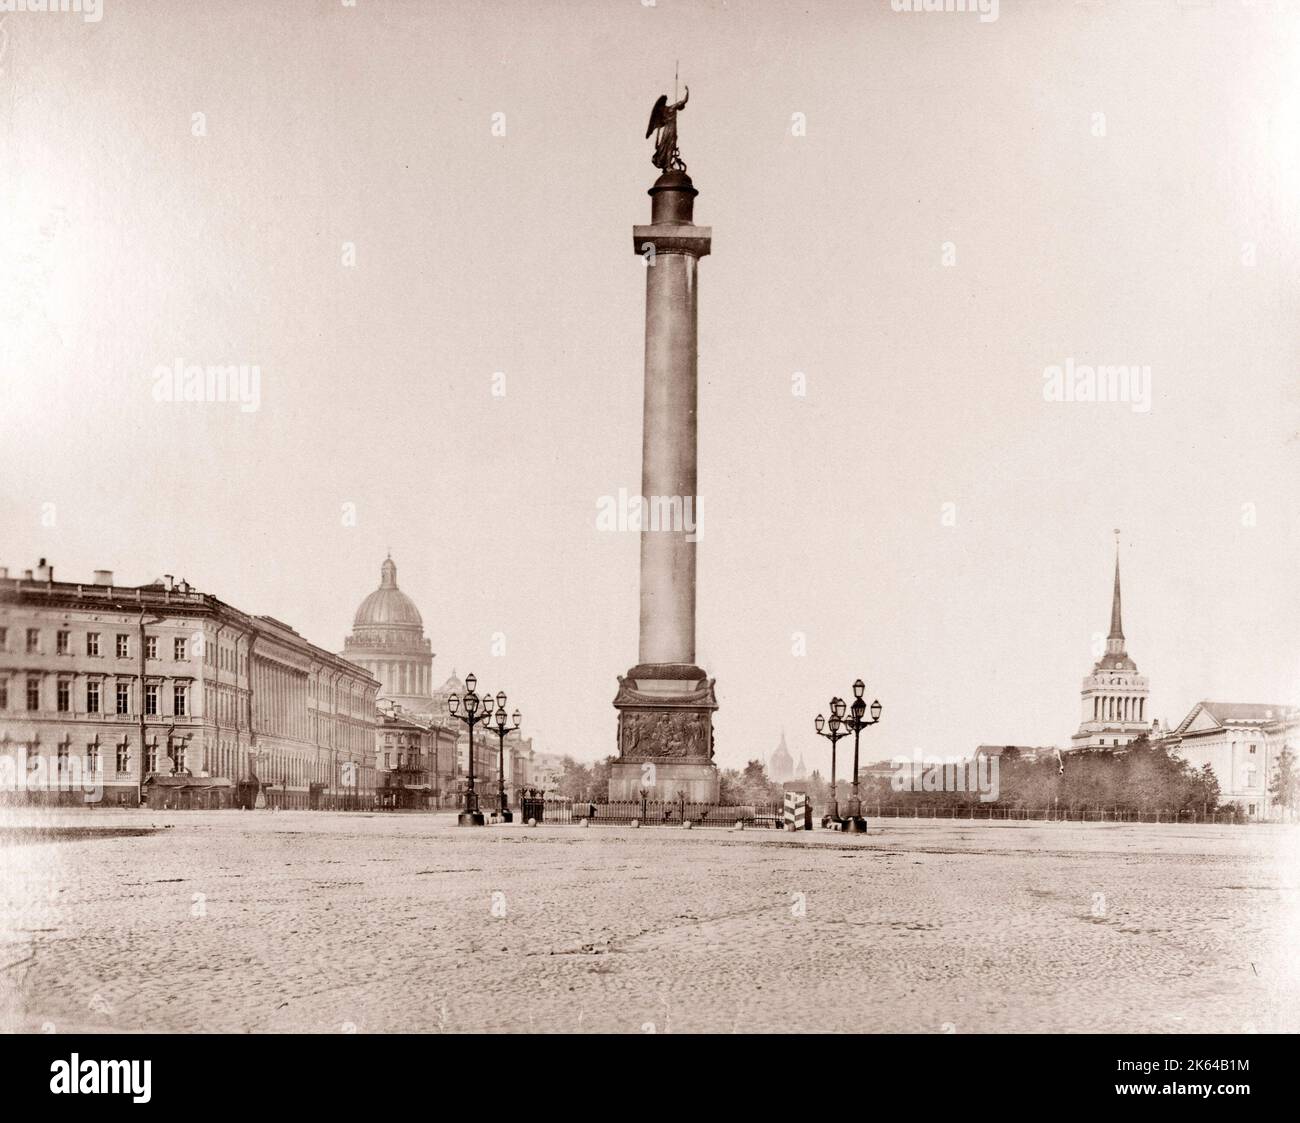 19th century vintage photograph Russia - Alexander, Alexandrian Column, St. Petersburg Stock Photo